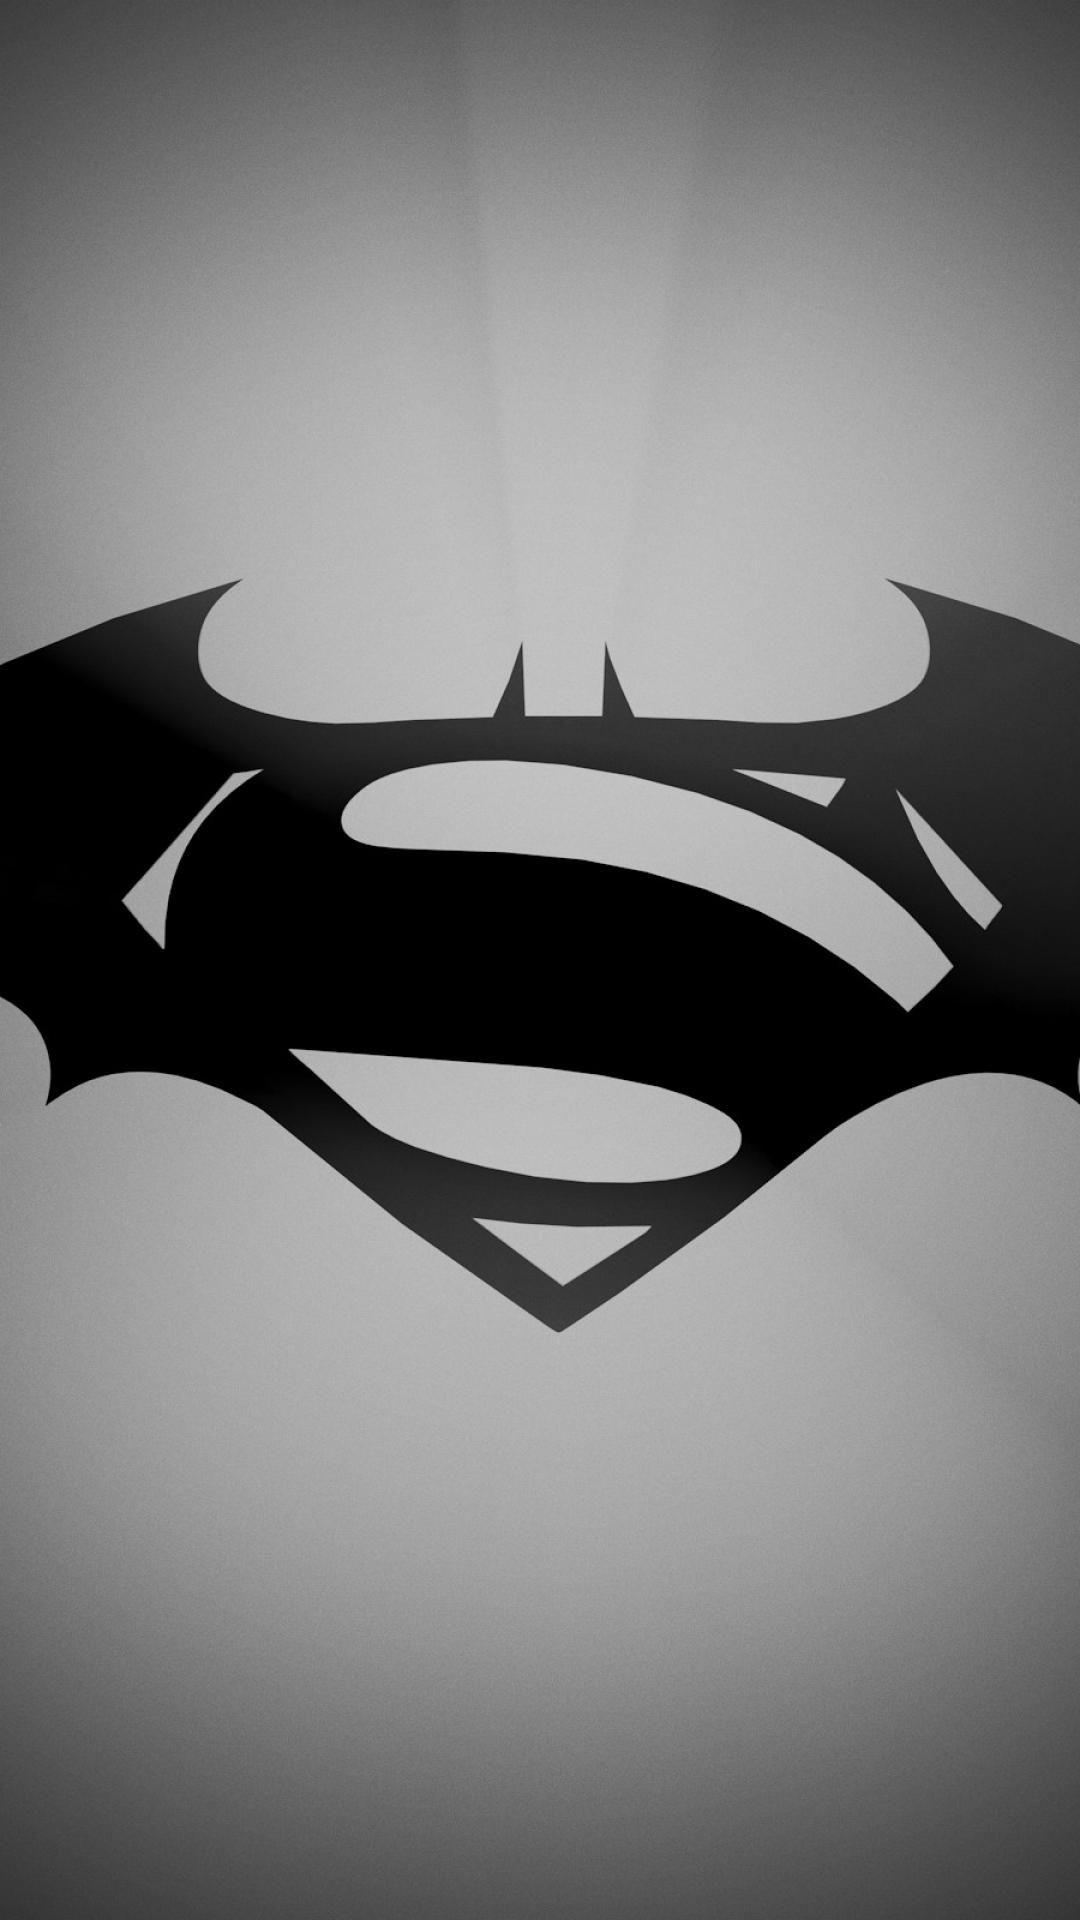 Free download Batman vs superman logo wallpaper 84180 [1080x1920] for your Desktop, Mobile & Tablet. Explore Batman vs Superman Symbol Wallpaper. Superman Logo Wallpaper, Batman v Superman iPhone Wallpaper